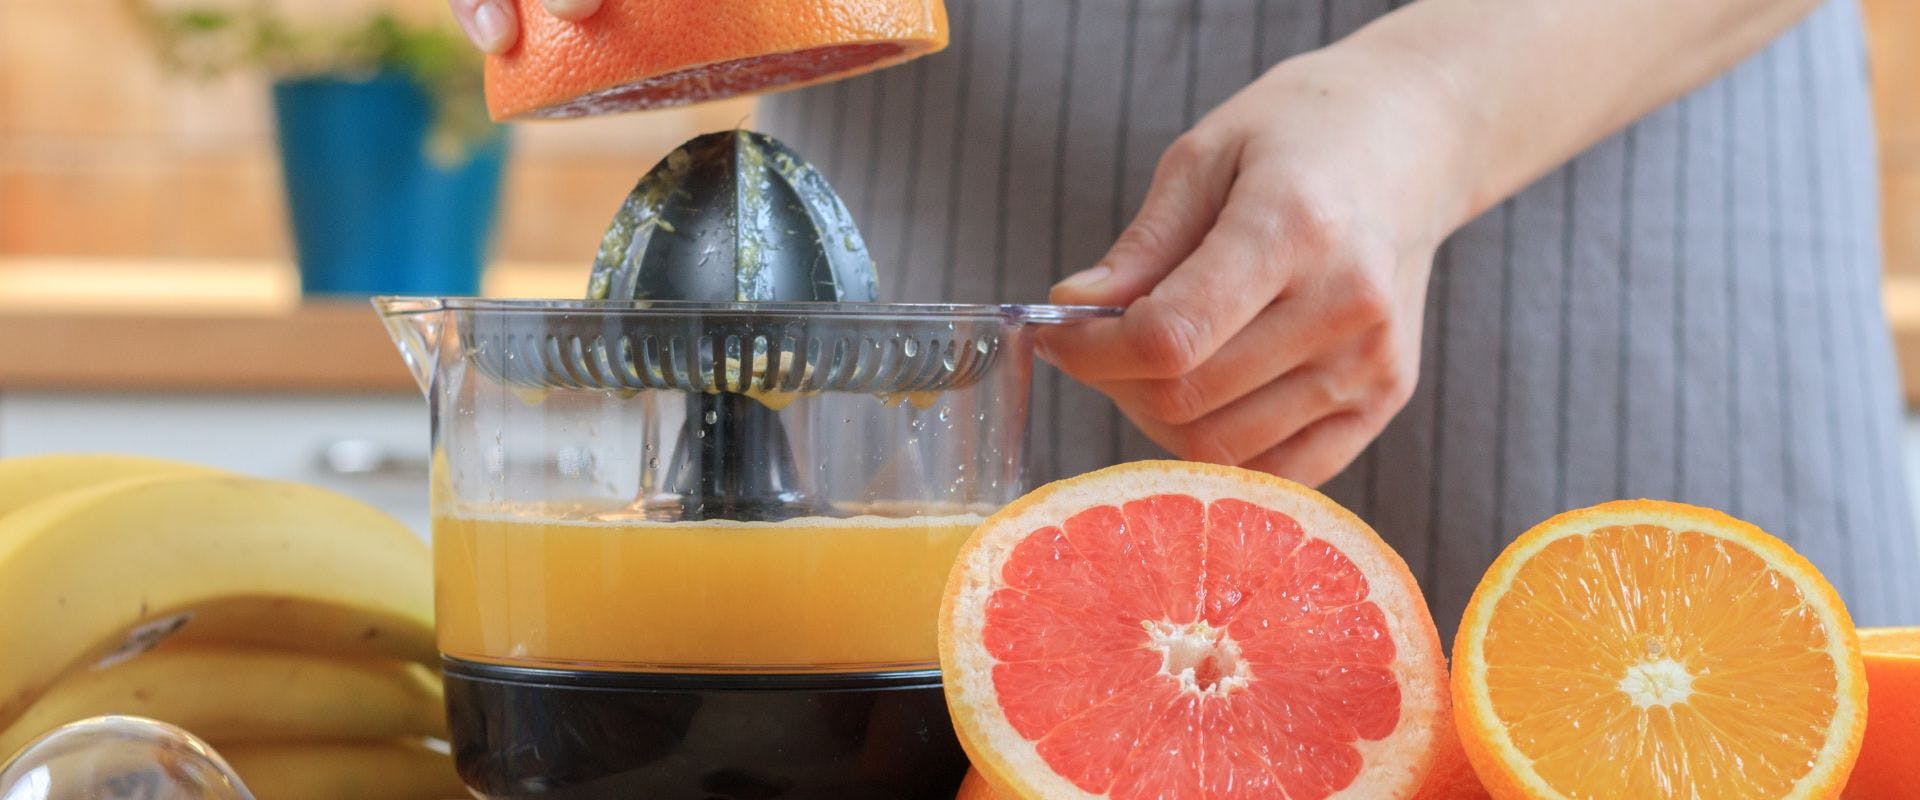 Grapefruit juice being squeezed